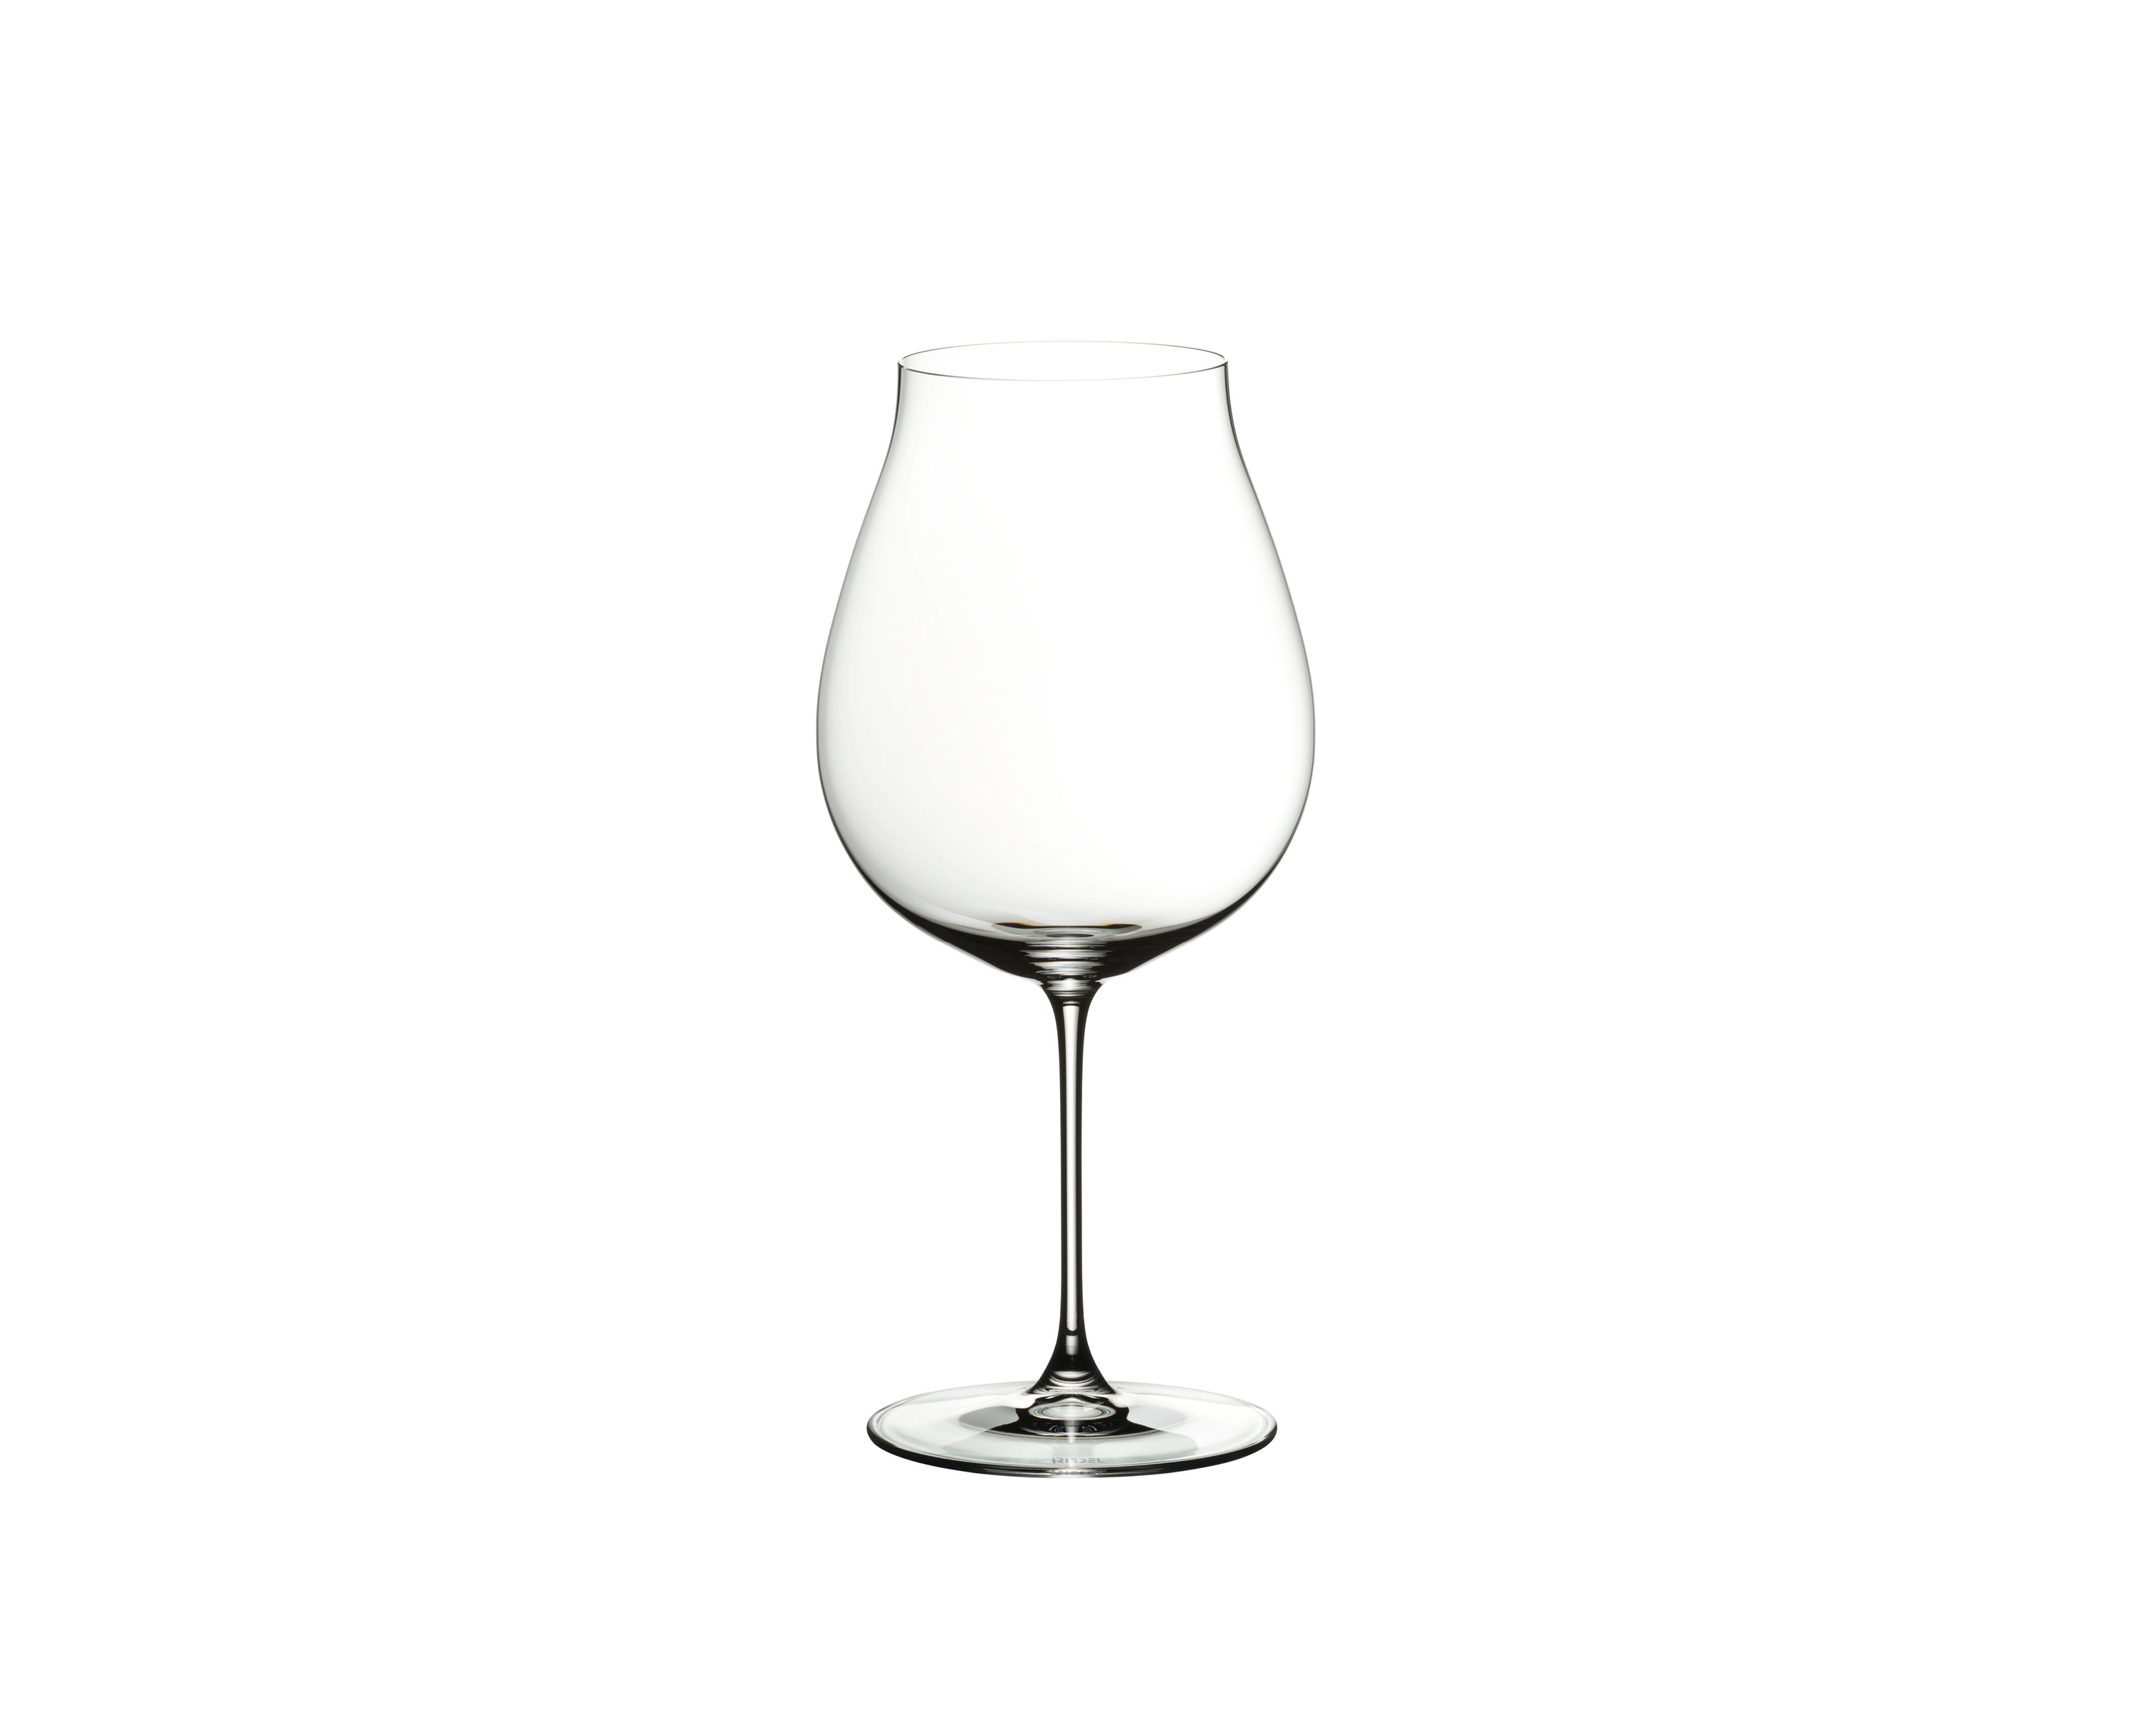 Riedel Veritas New World Pinot Noir/Nebbiolo/Rosè Glasses, Set of 2 Glasses